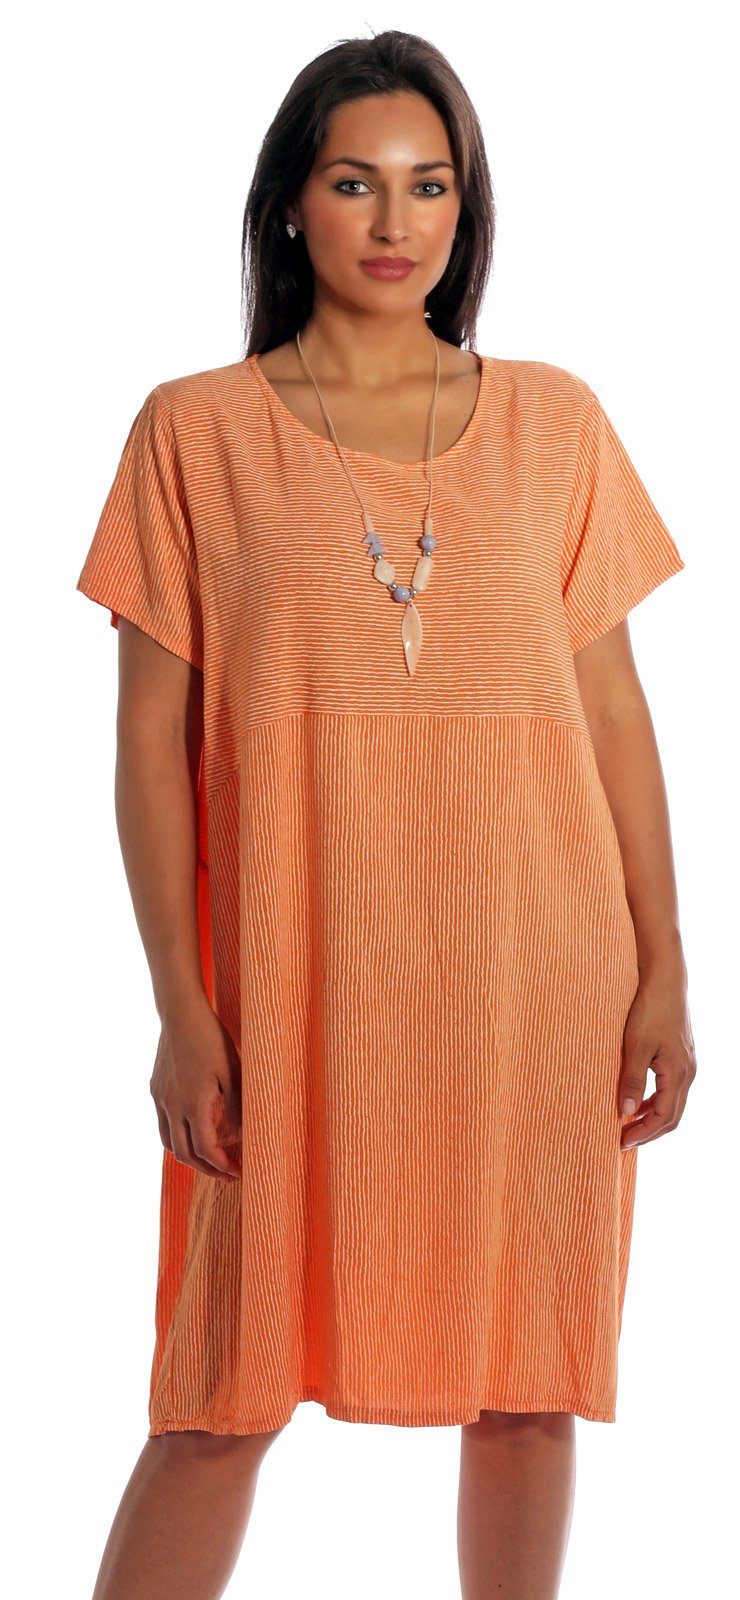 Moda Sommerkleid mit Modeschmuckkette Orange "Paula" gestreift Shirtkleid Charis